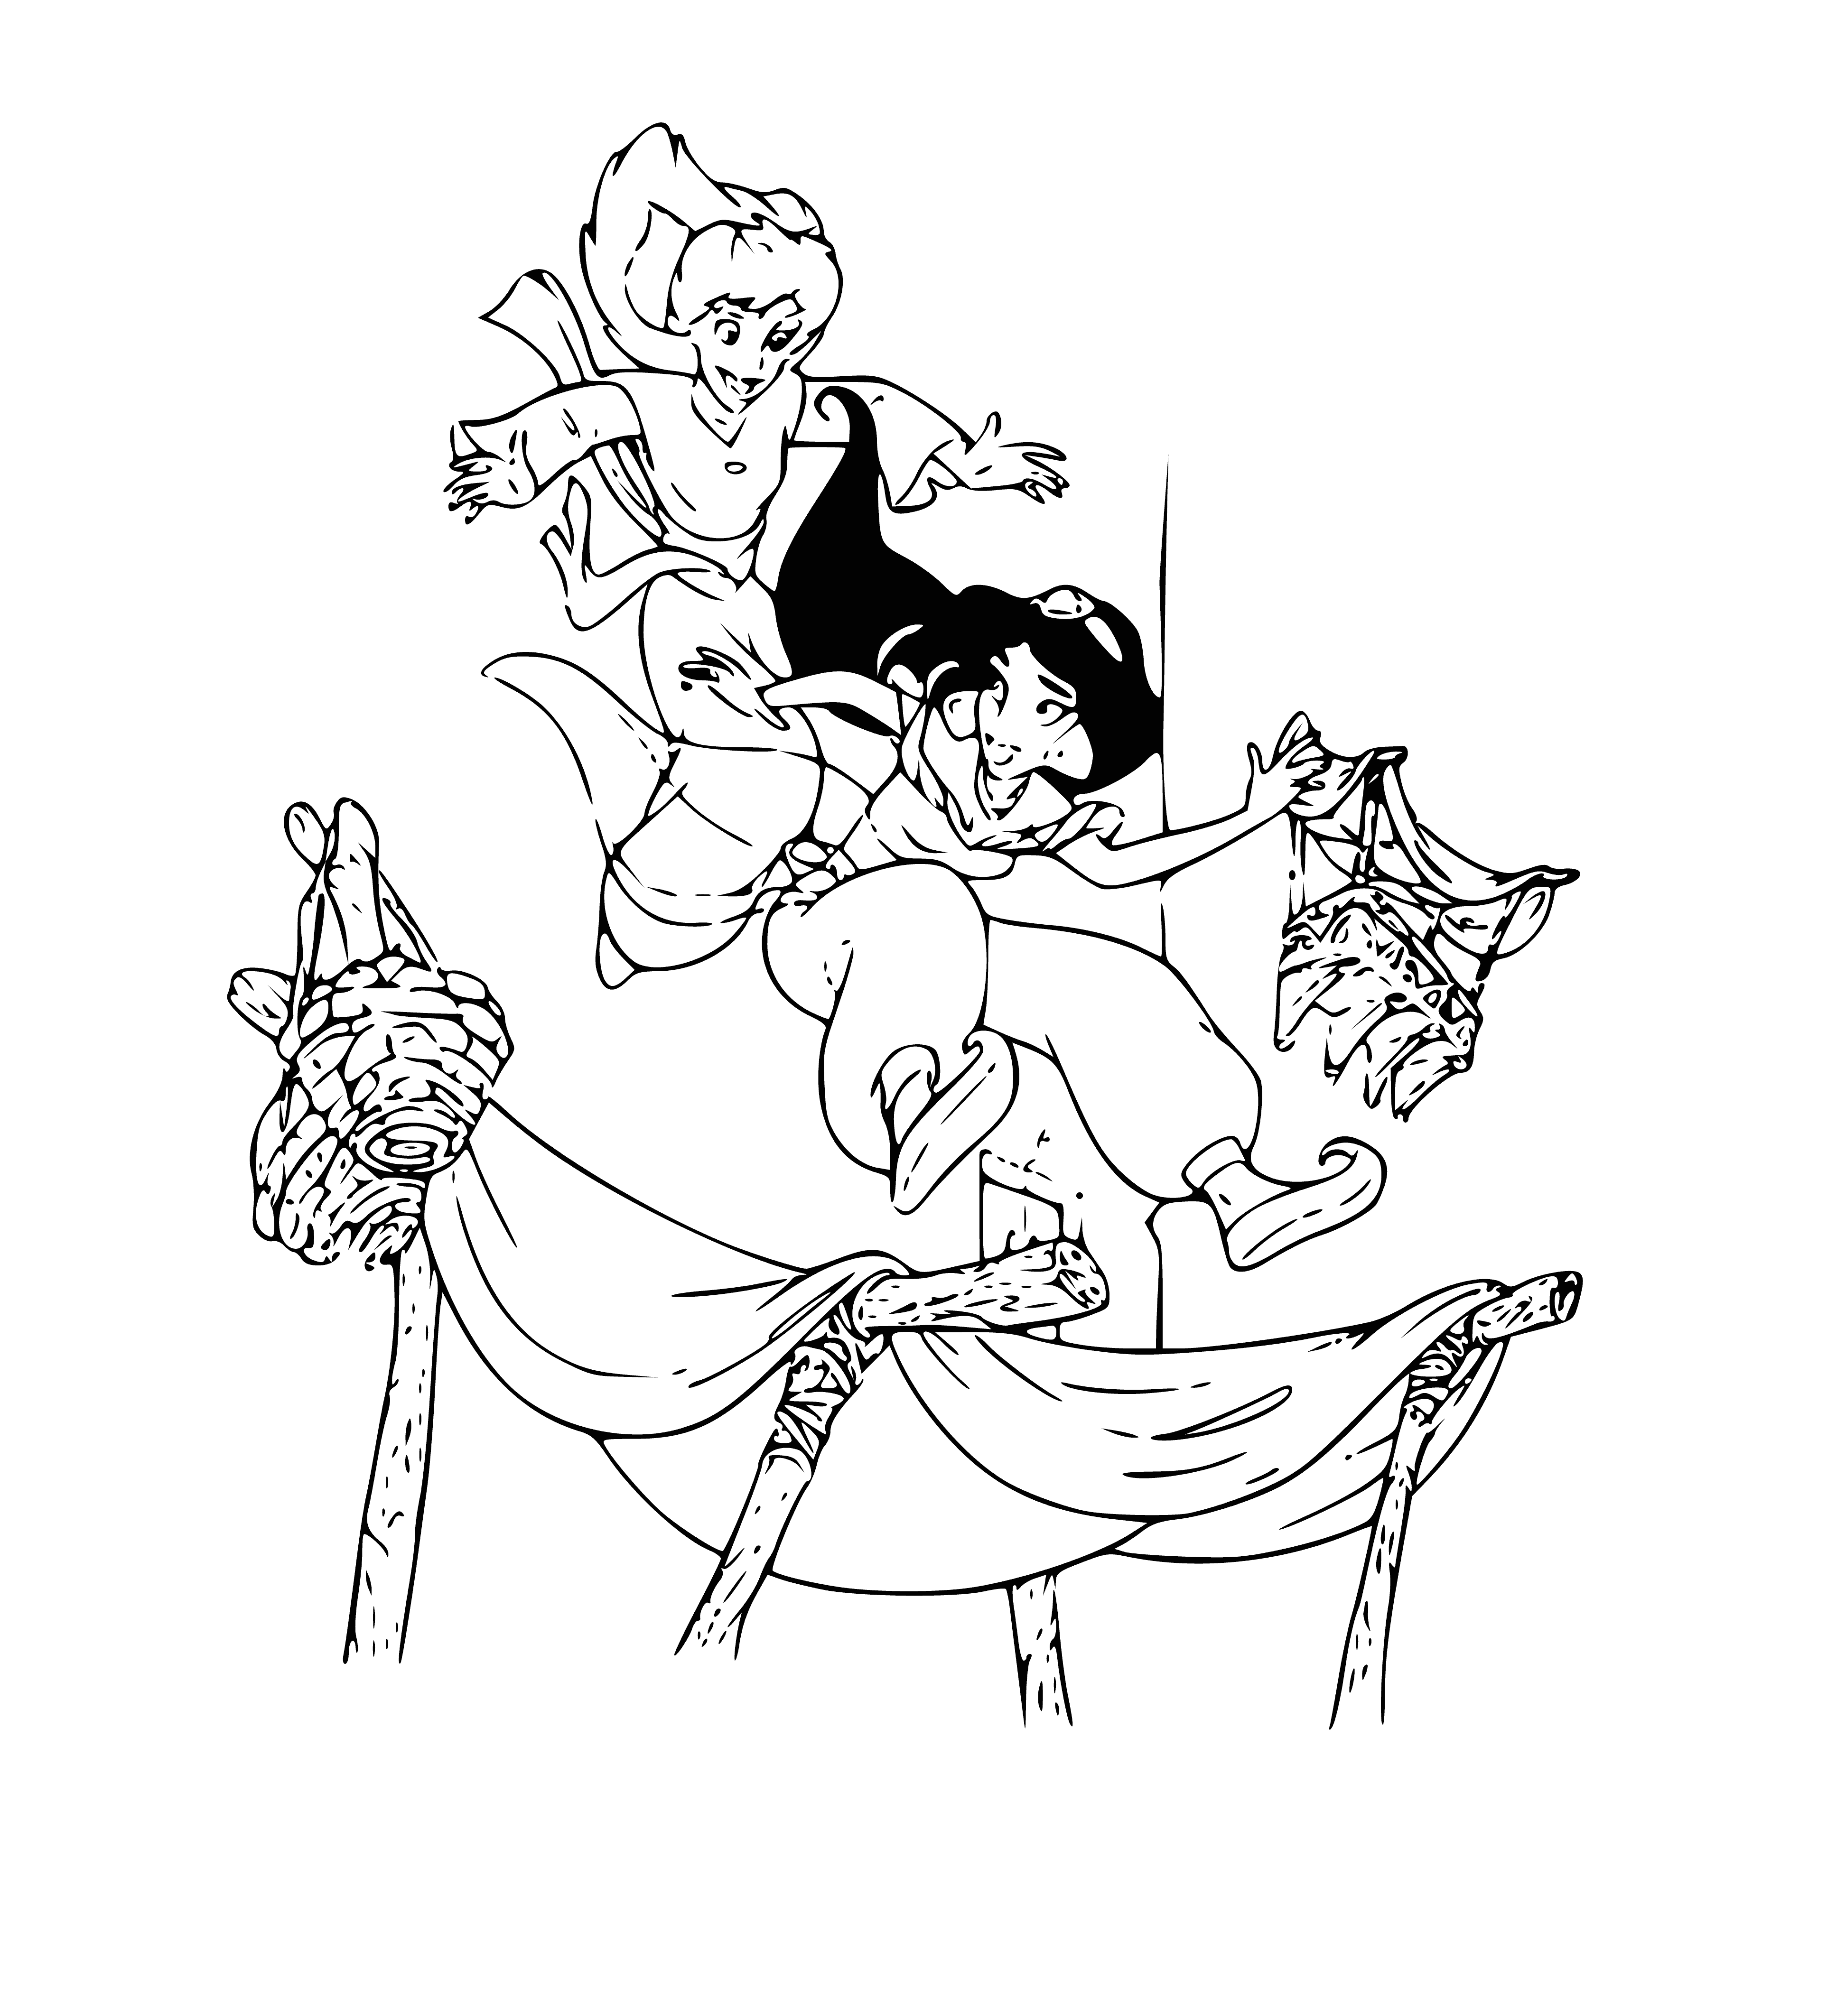 coloring page: Jasmine runs joyfully through a field of flowers, black hair blowing, wearing a white dress w/ a purple belt.